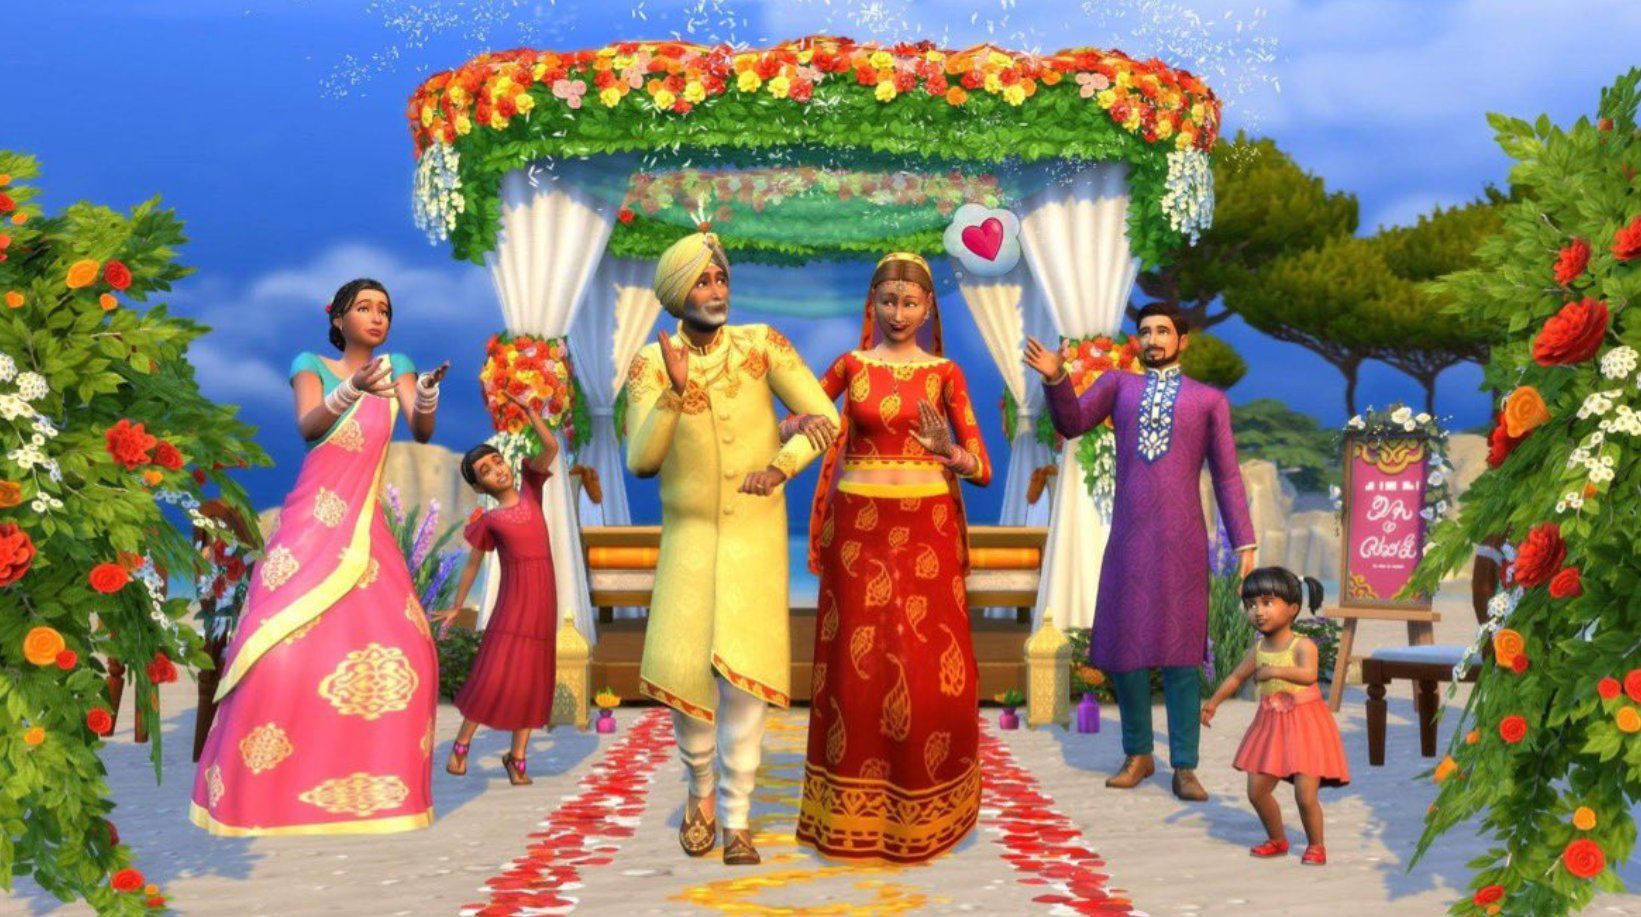 The Sims 4 My Wedding Stories Screenshot